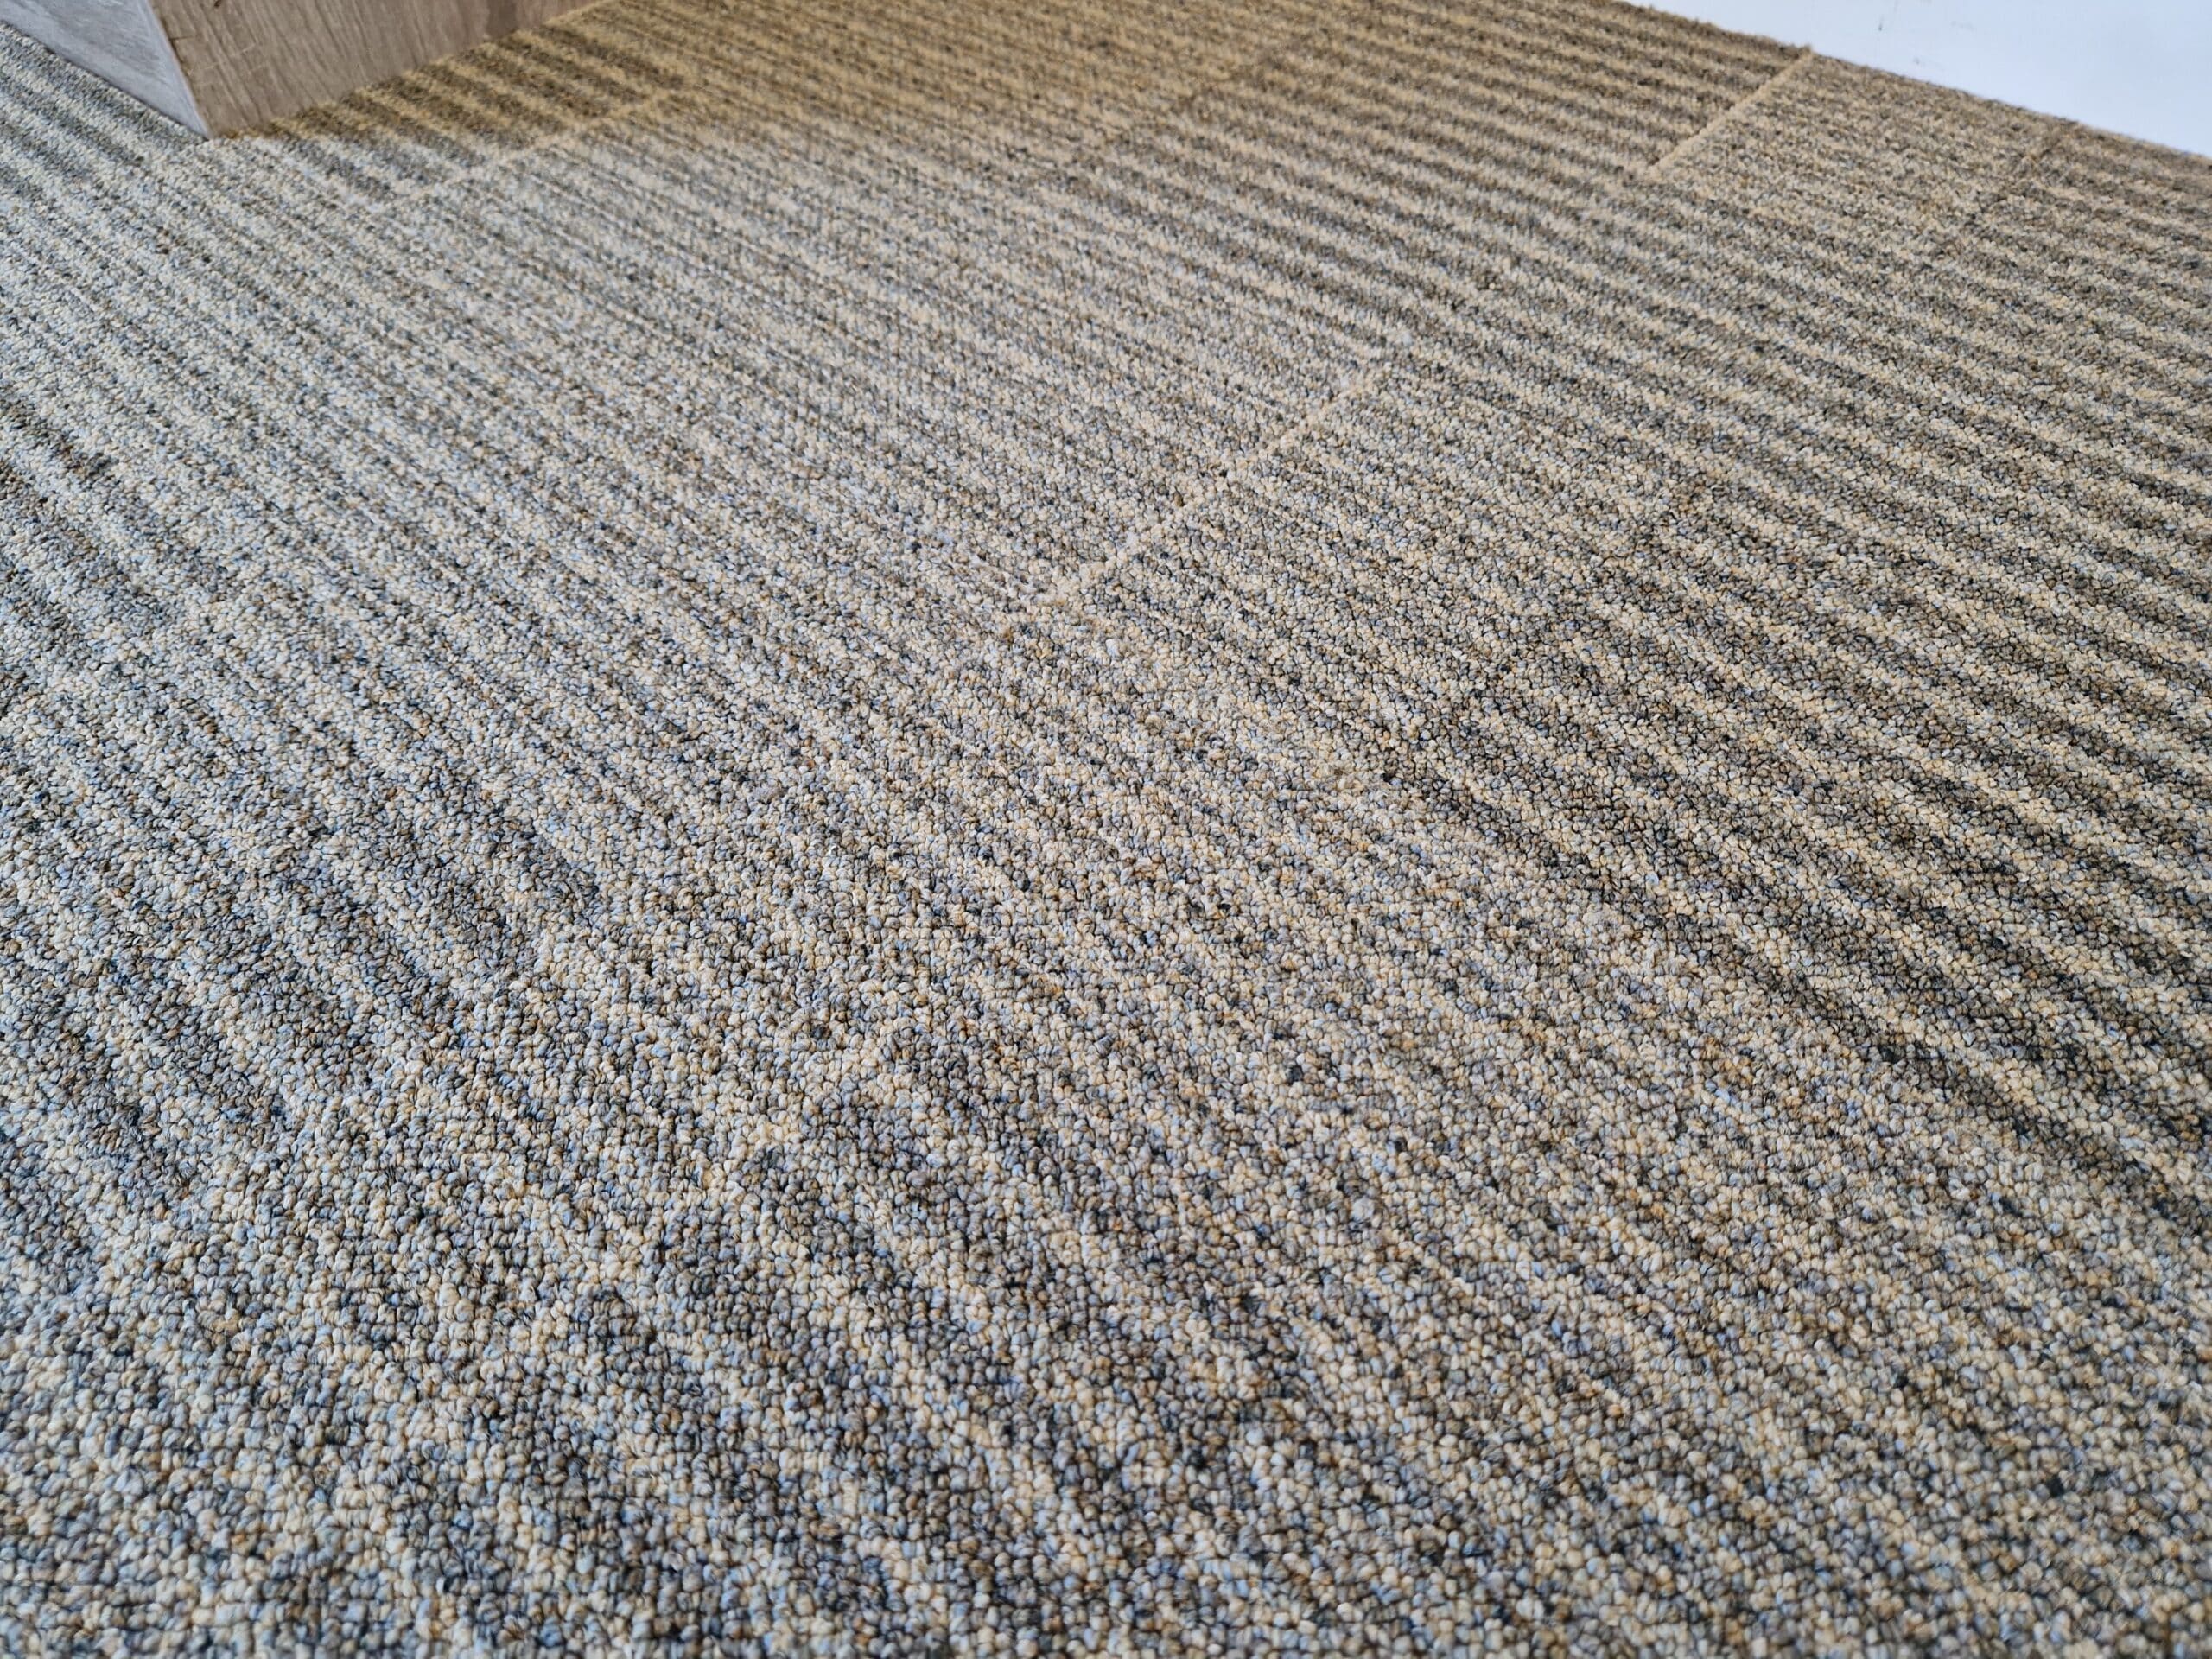 tapijttegels beige reuse a kwaliteit 46.5x46.5cm